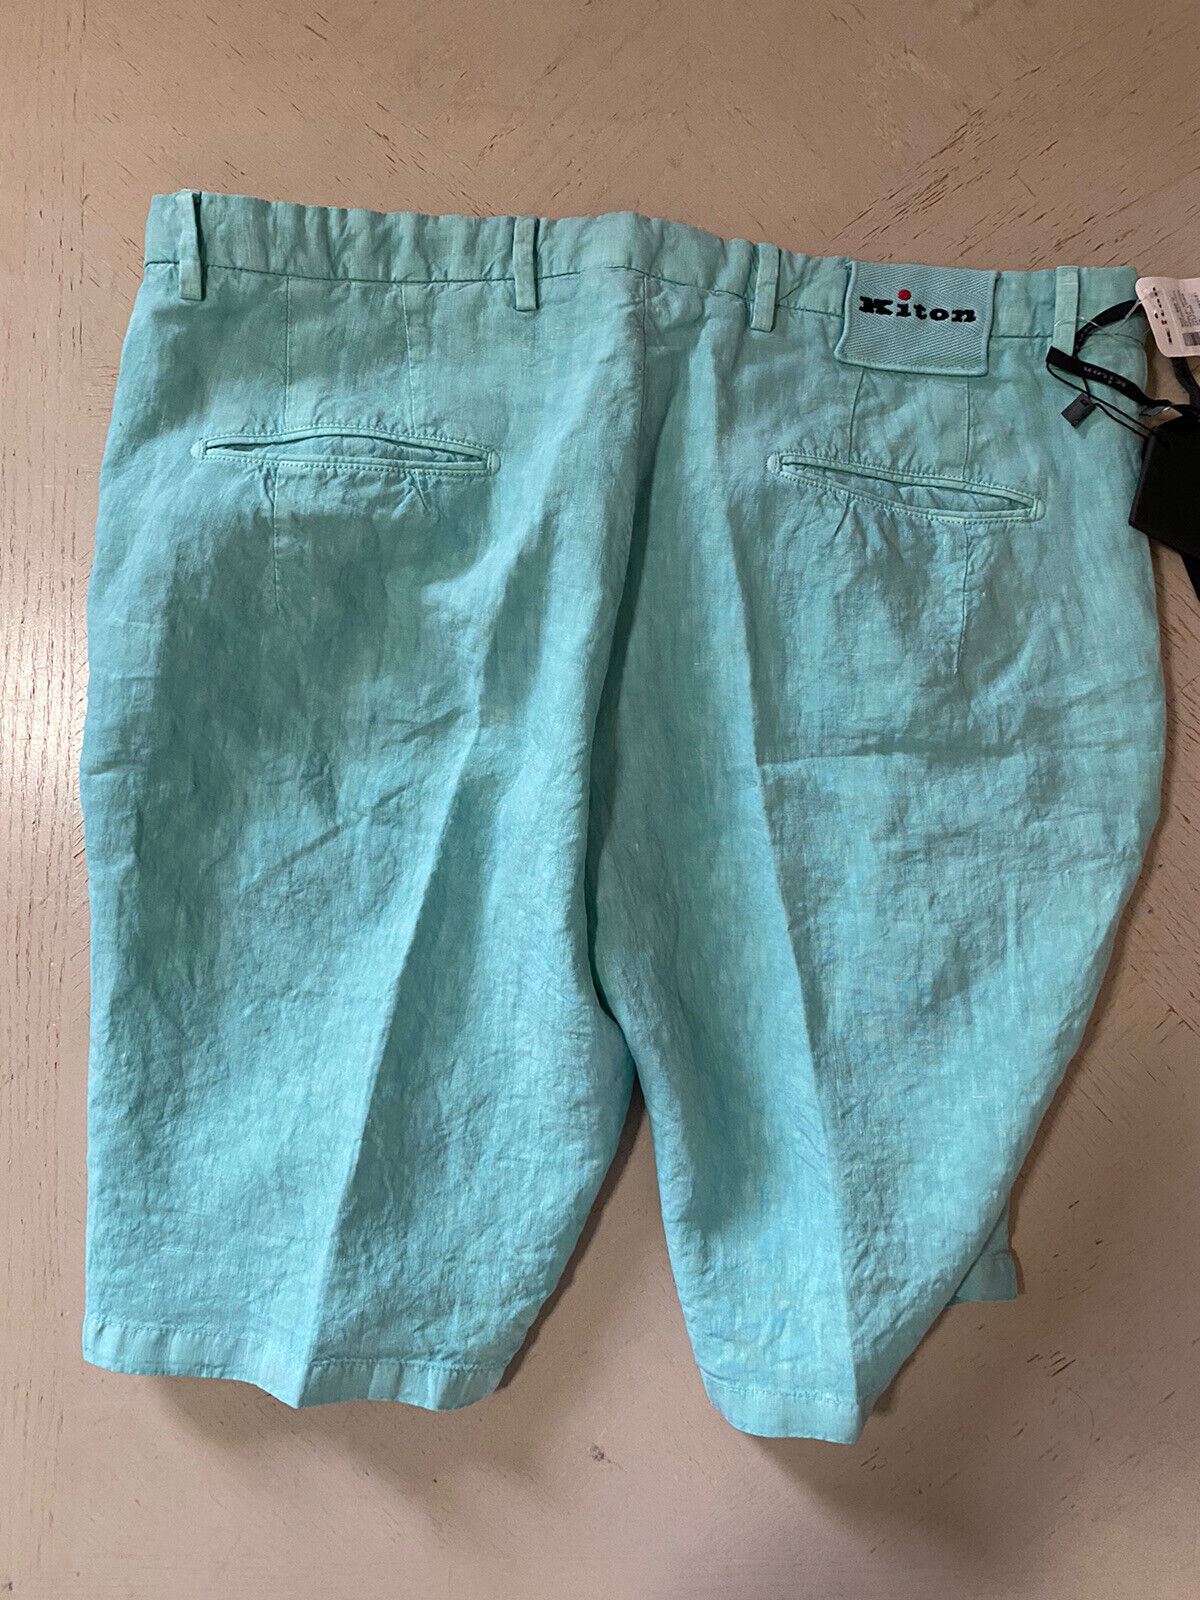 NWT $995 Kiton Mens Linen Short Pants Seafoam Green 36 US/ 52 Eu Italy